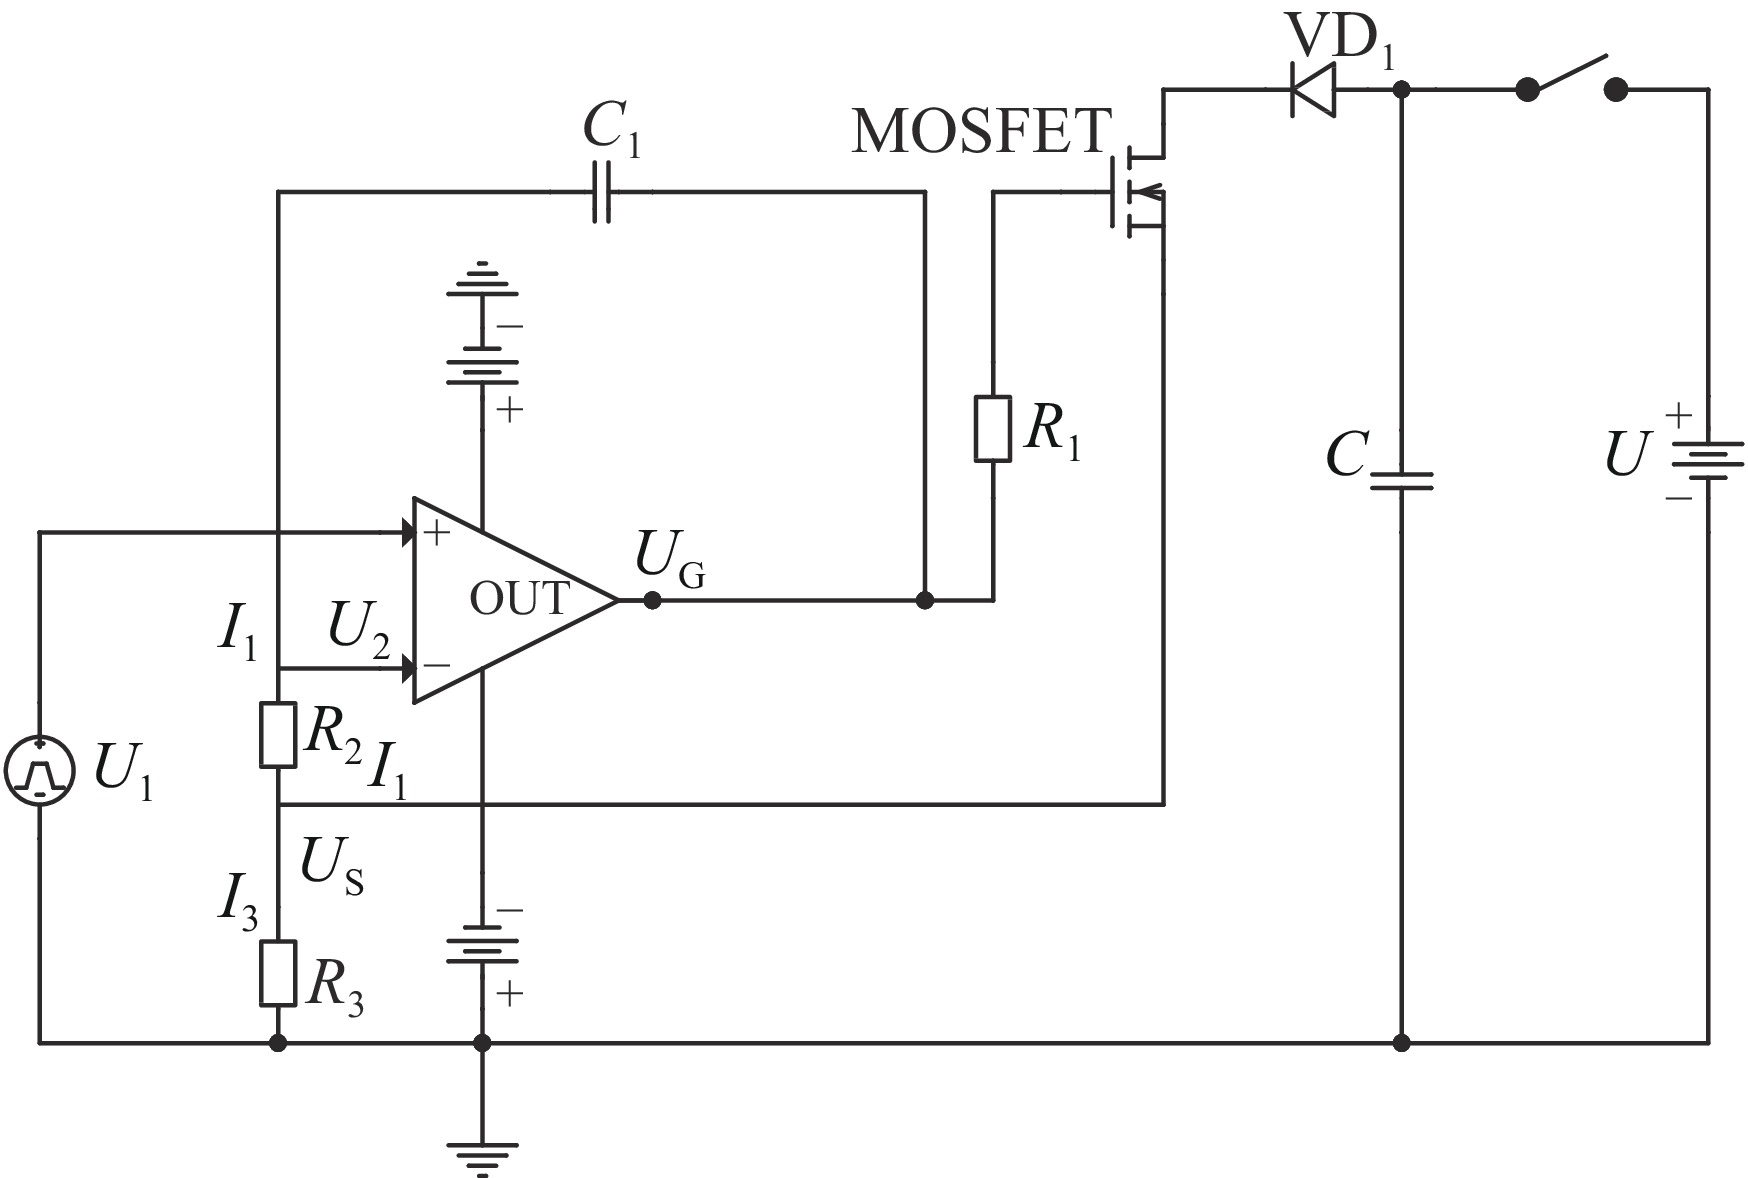 Schematic diagram of the circuit